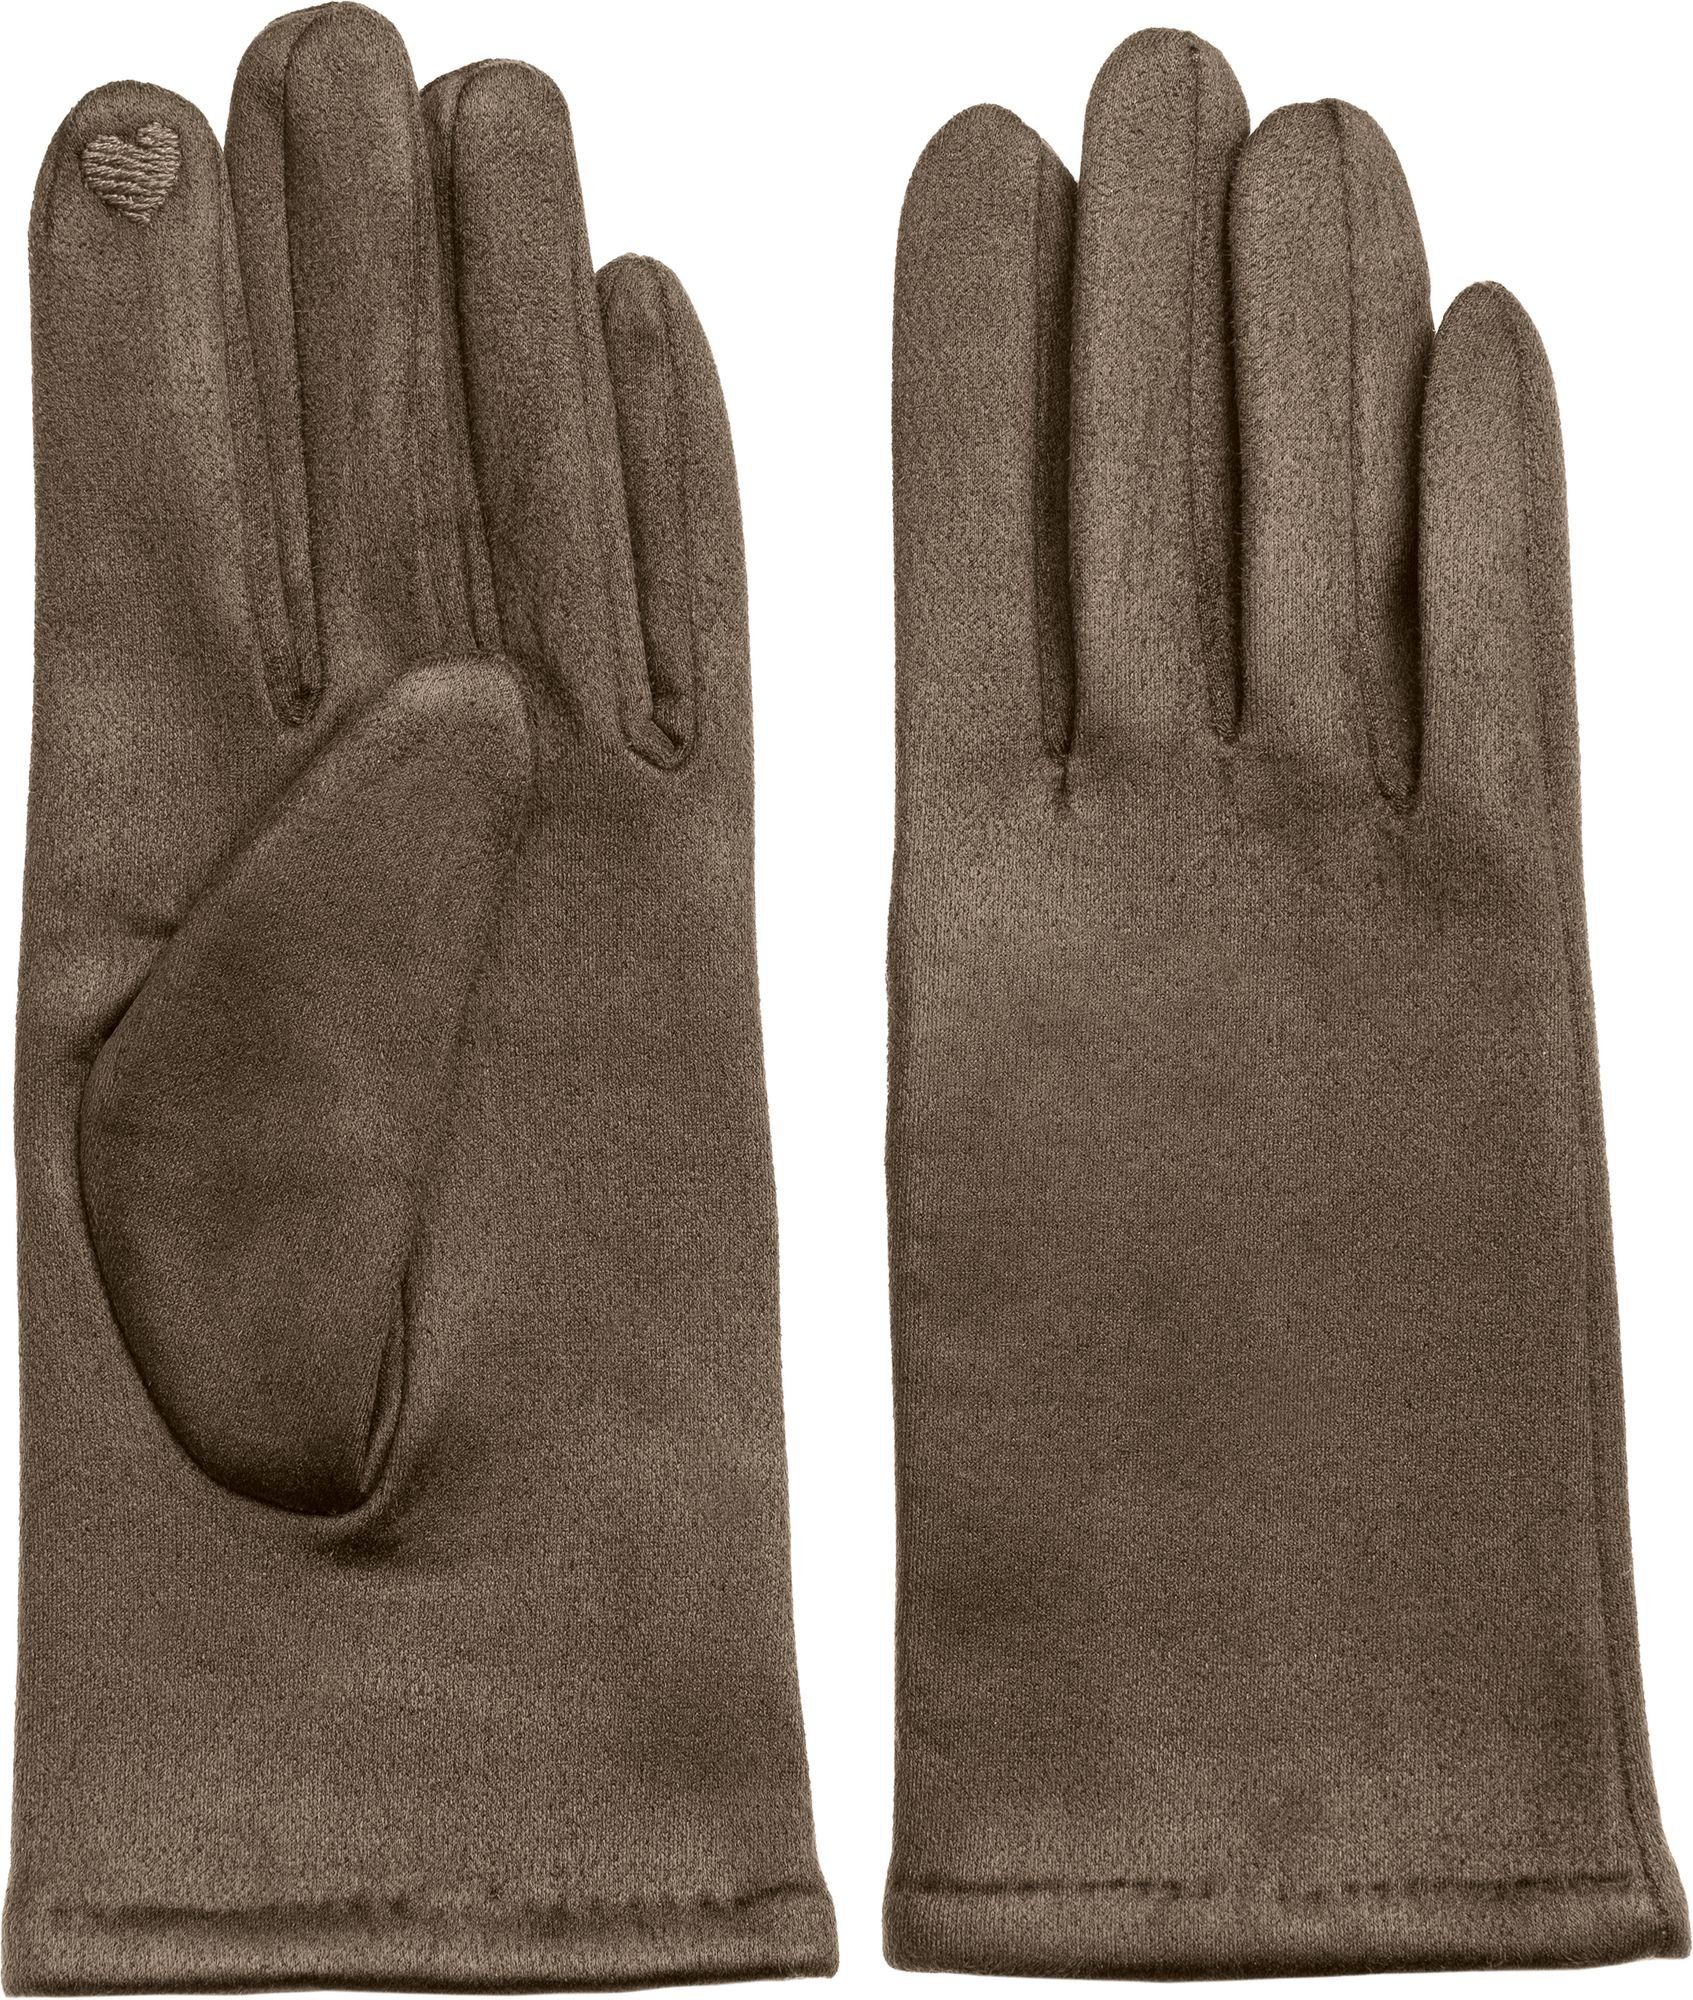 Caspar Strickhandschuhe GLV013 klassisch elegante uni Damen Winter Handschuhe braun | Strickhandschuhe